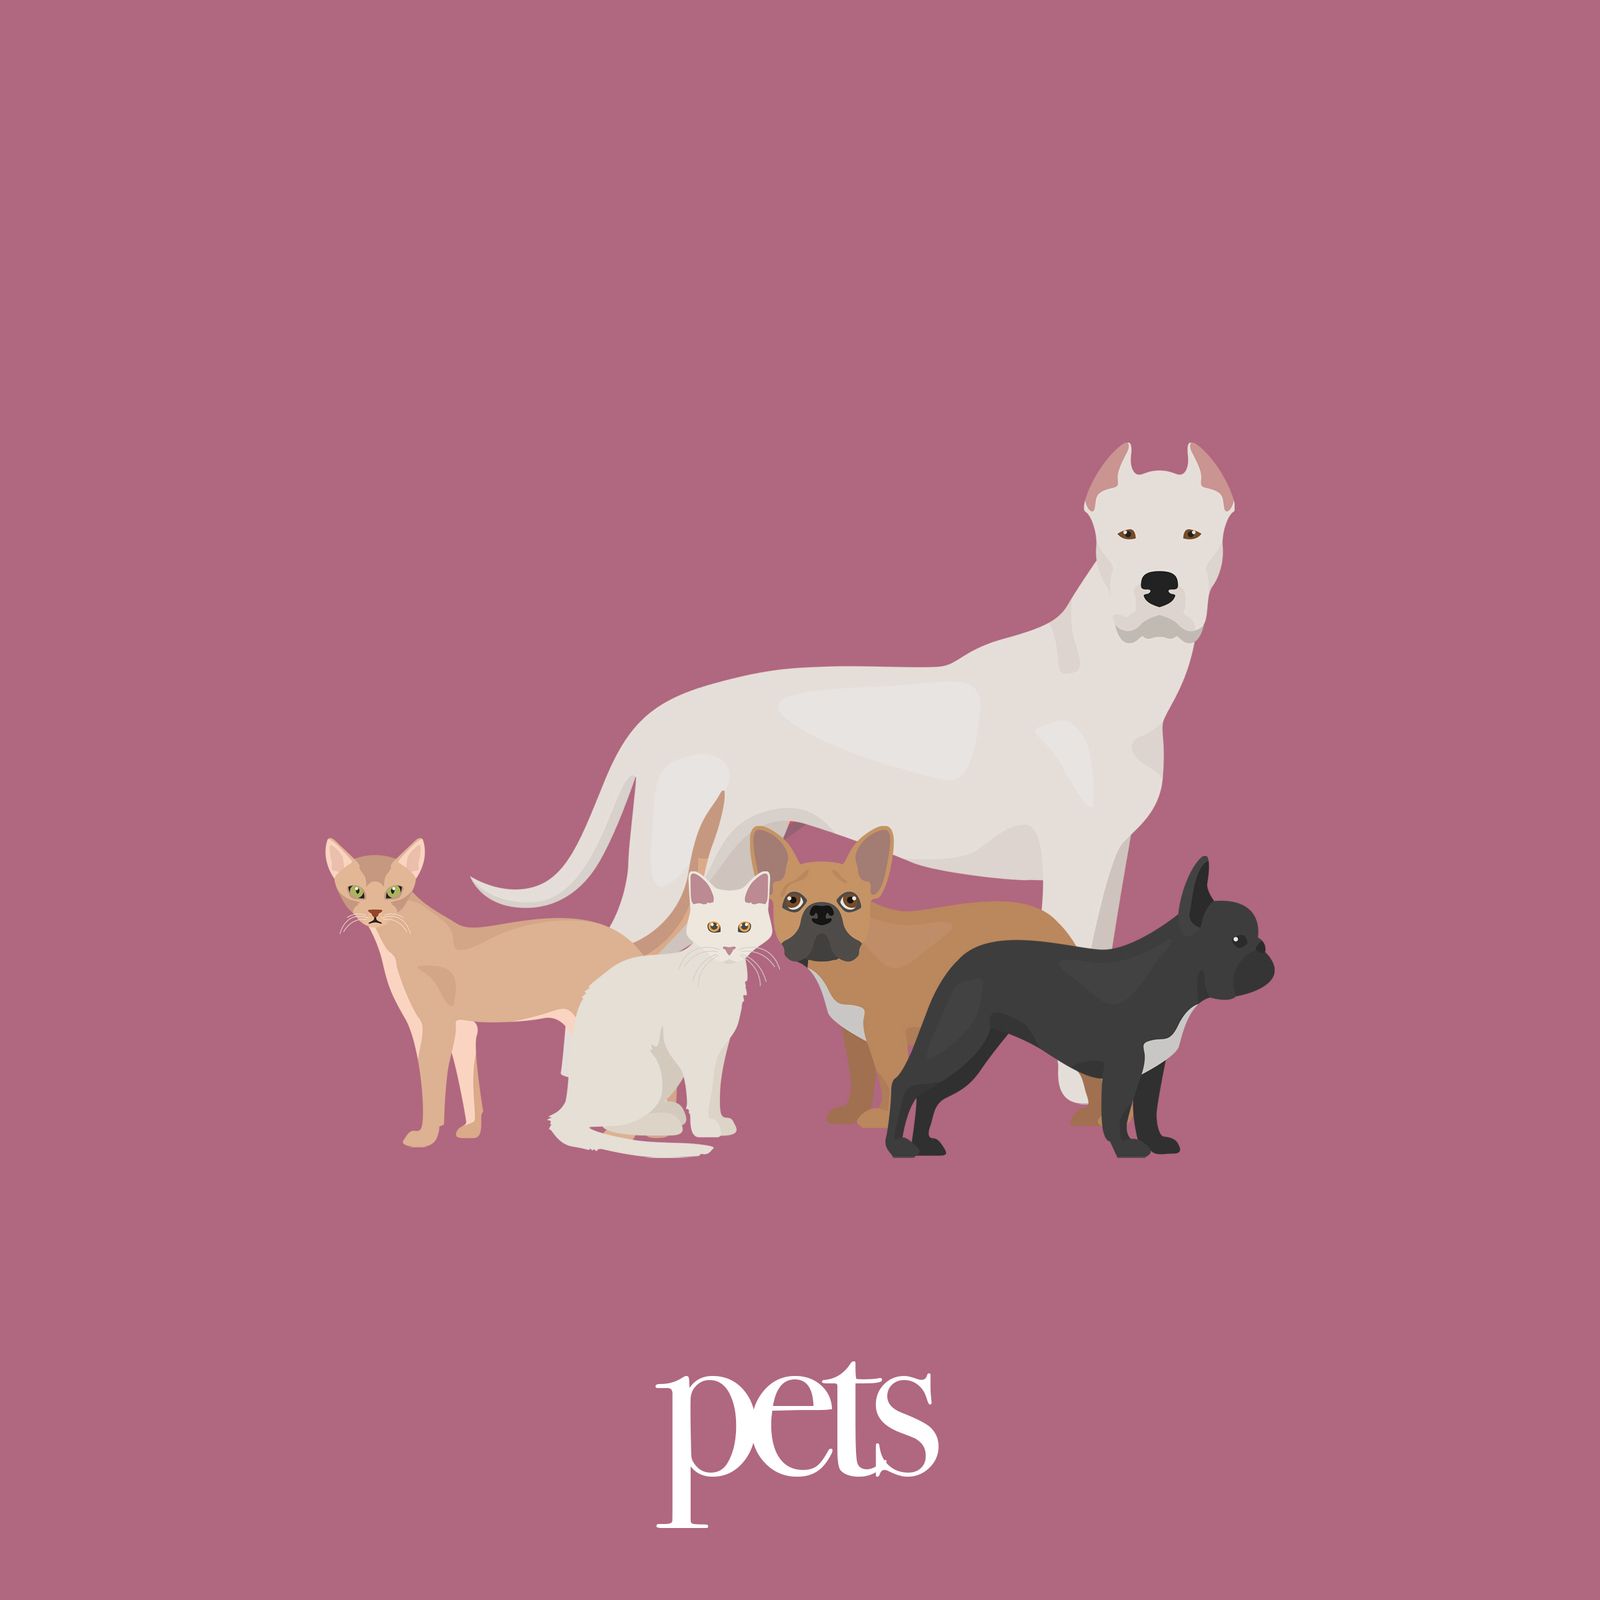 19: Pets